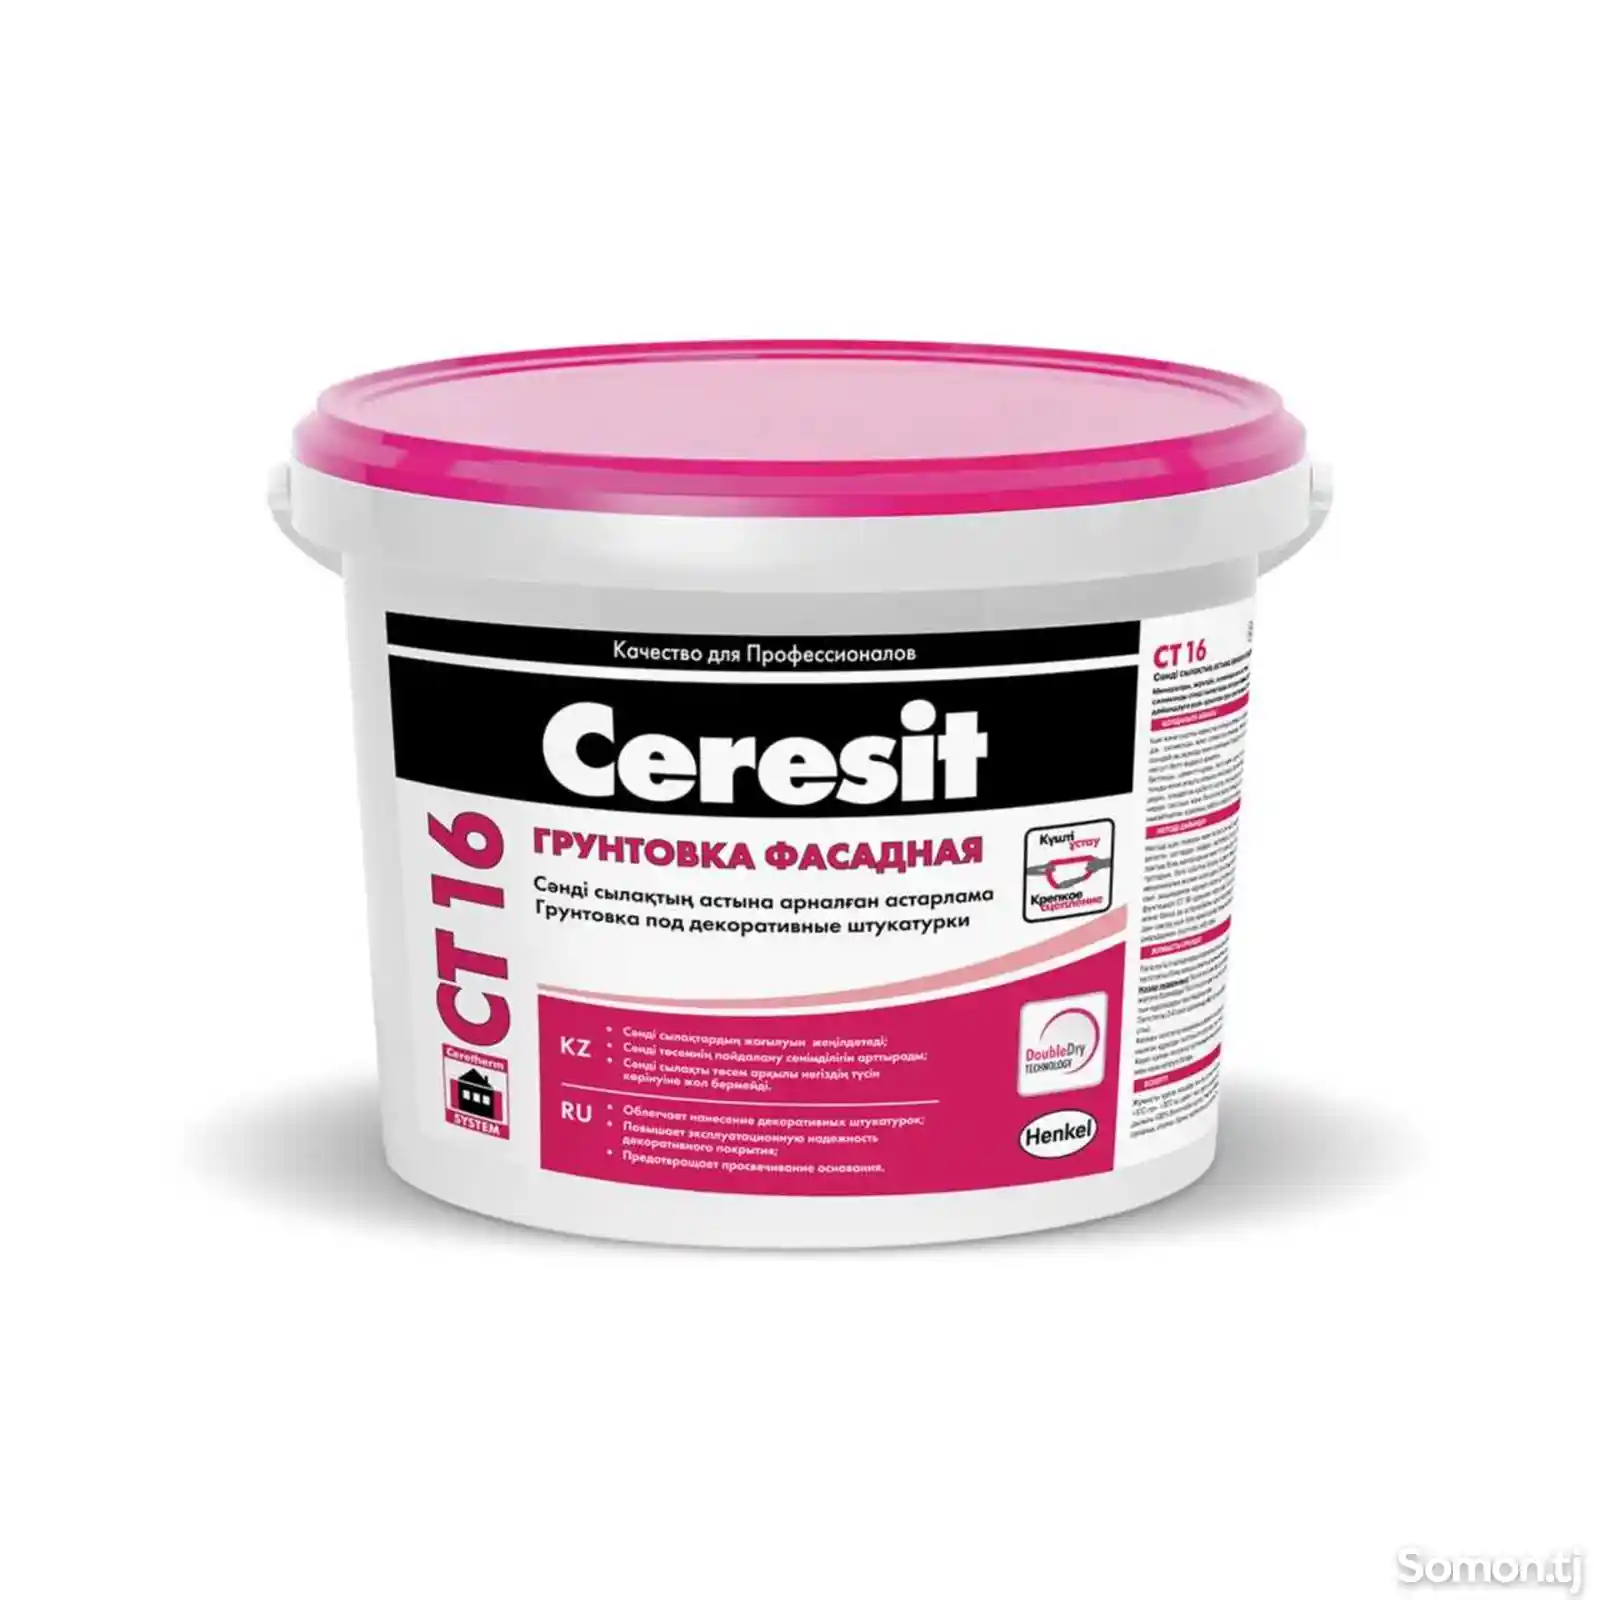 Грунтовая краска Ceresit CT 16